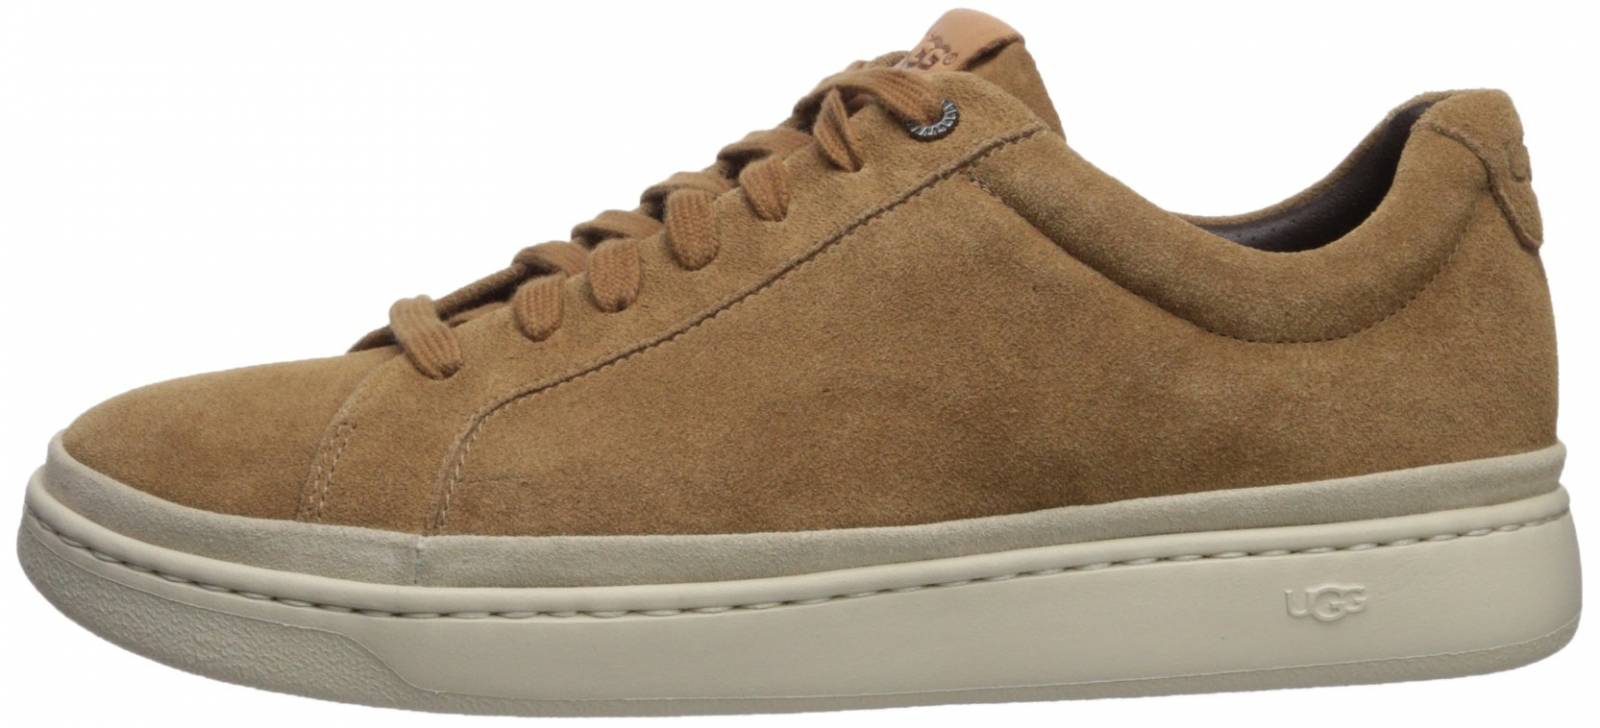 UGG Cali Sneaker Low sneakers in brown (only $90) | RunRepeat